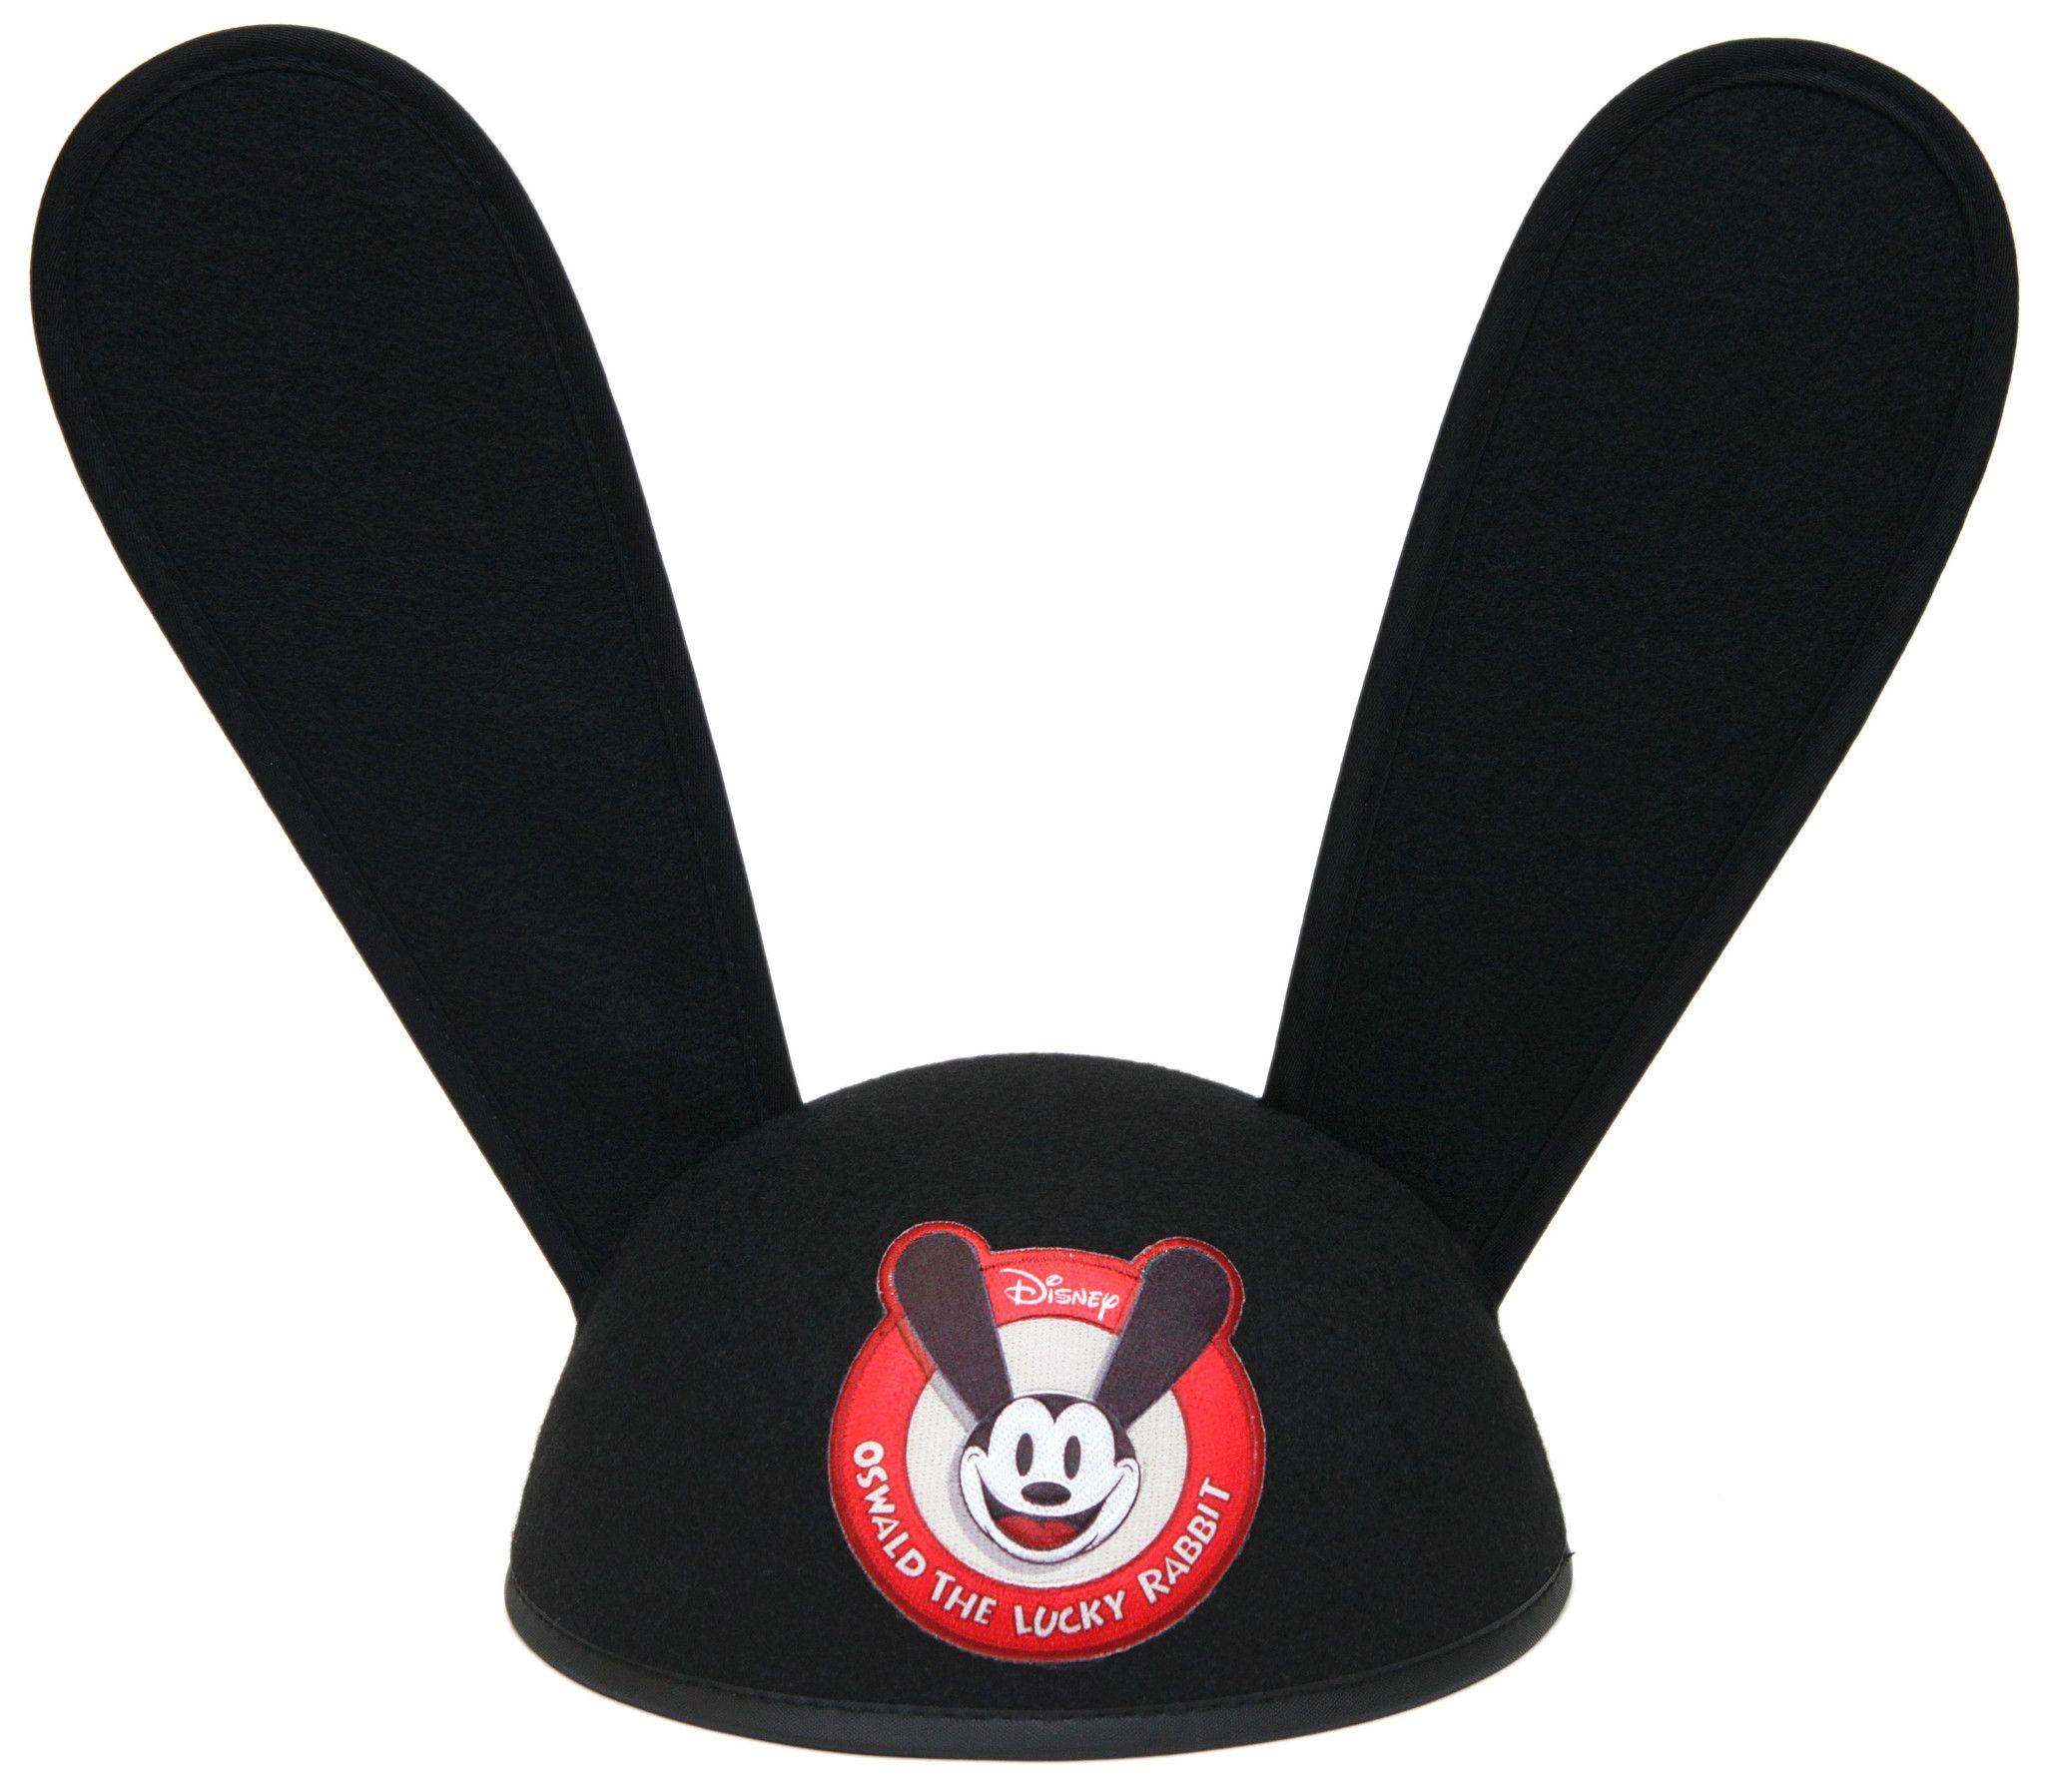 Oswald the Lucky Rabbit Logo - Disney World: Oswald the Lucky Rabbit Hats at Disney World